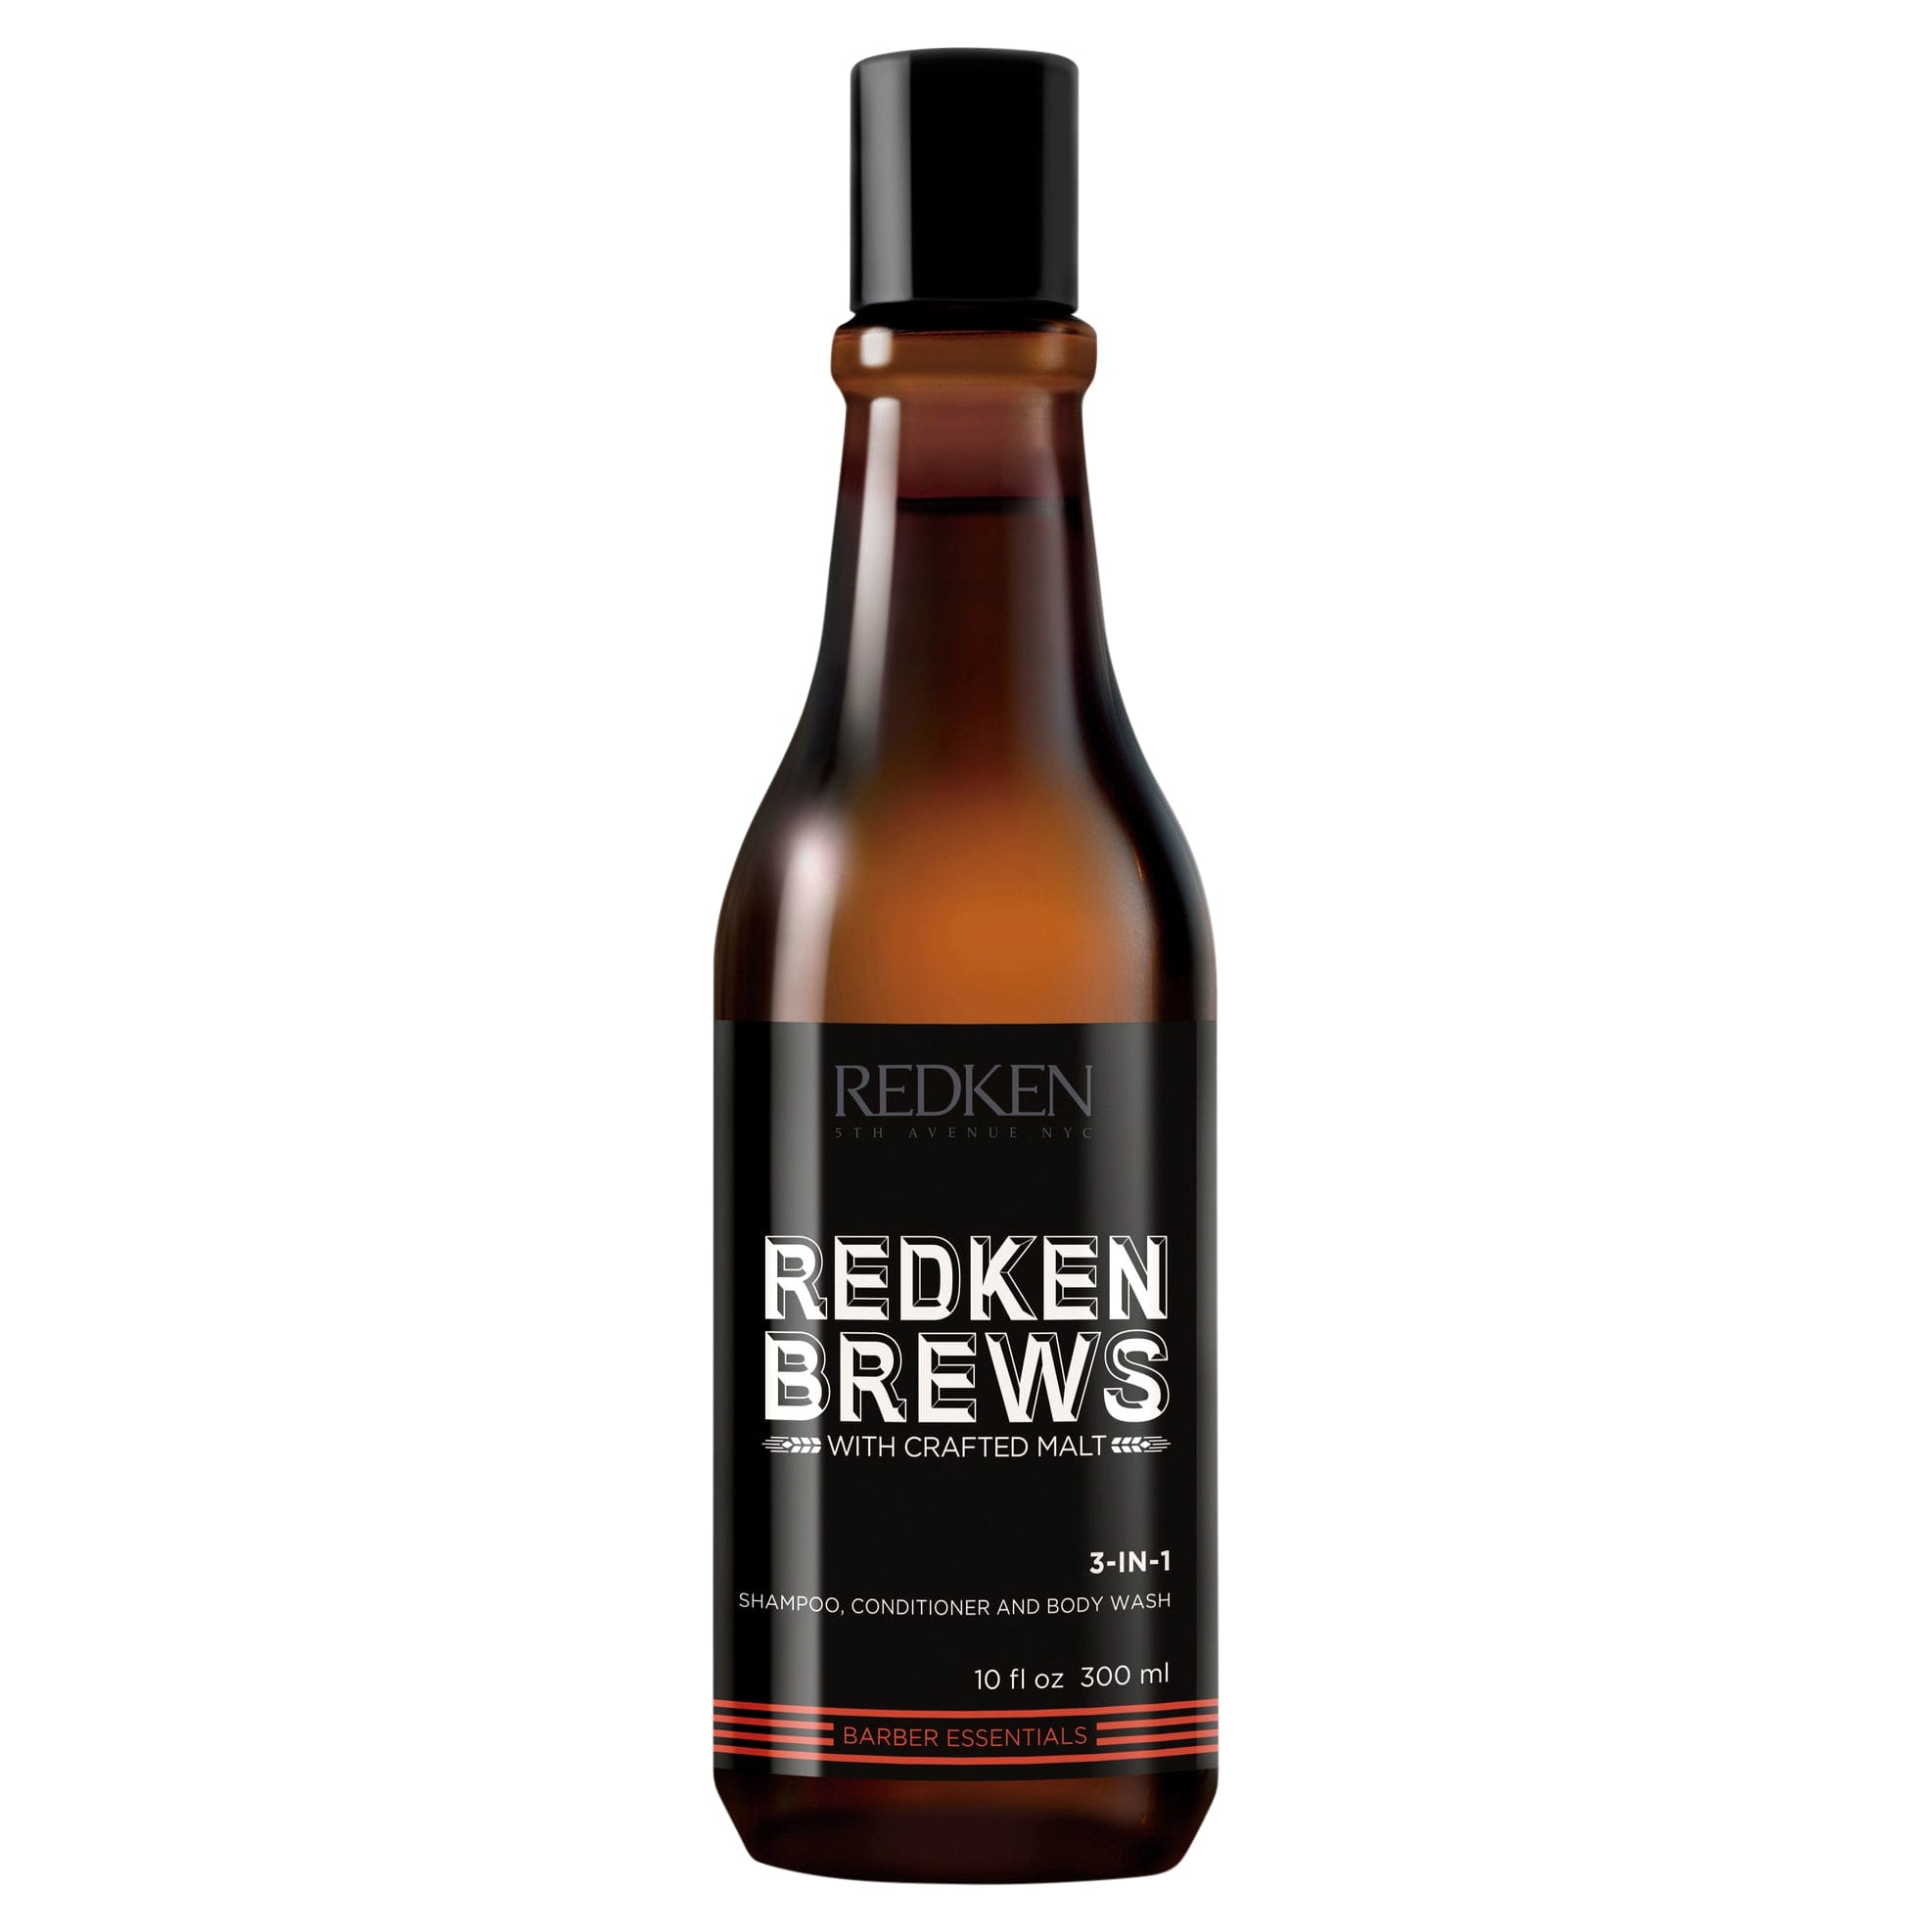 Redken® Brews 3-In-1 Shampoo, Conditioner And Body Wash.